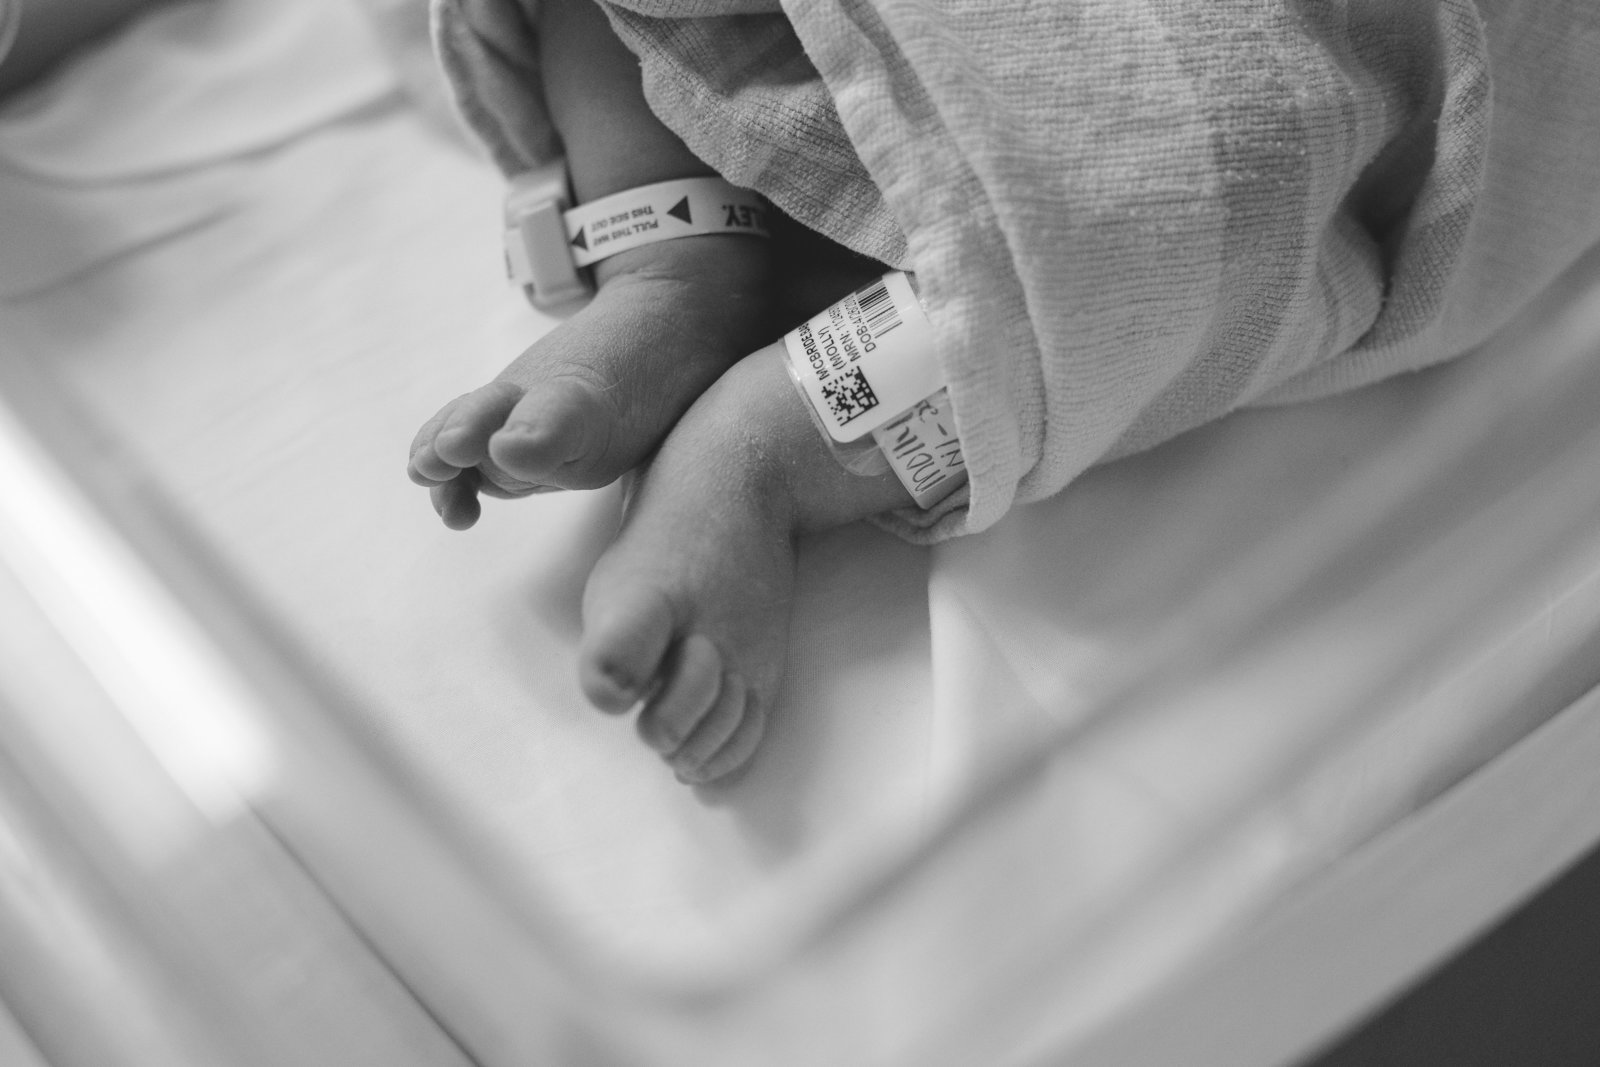 newborn baby lays in bassinet in hospital